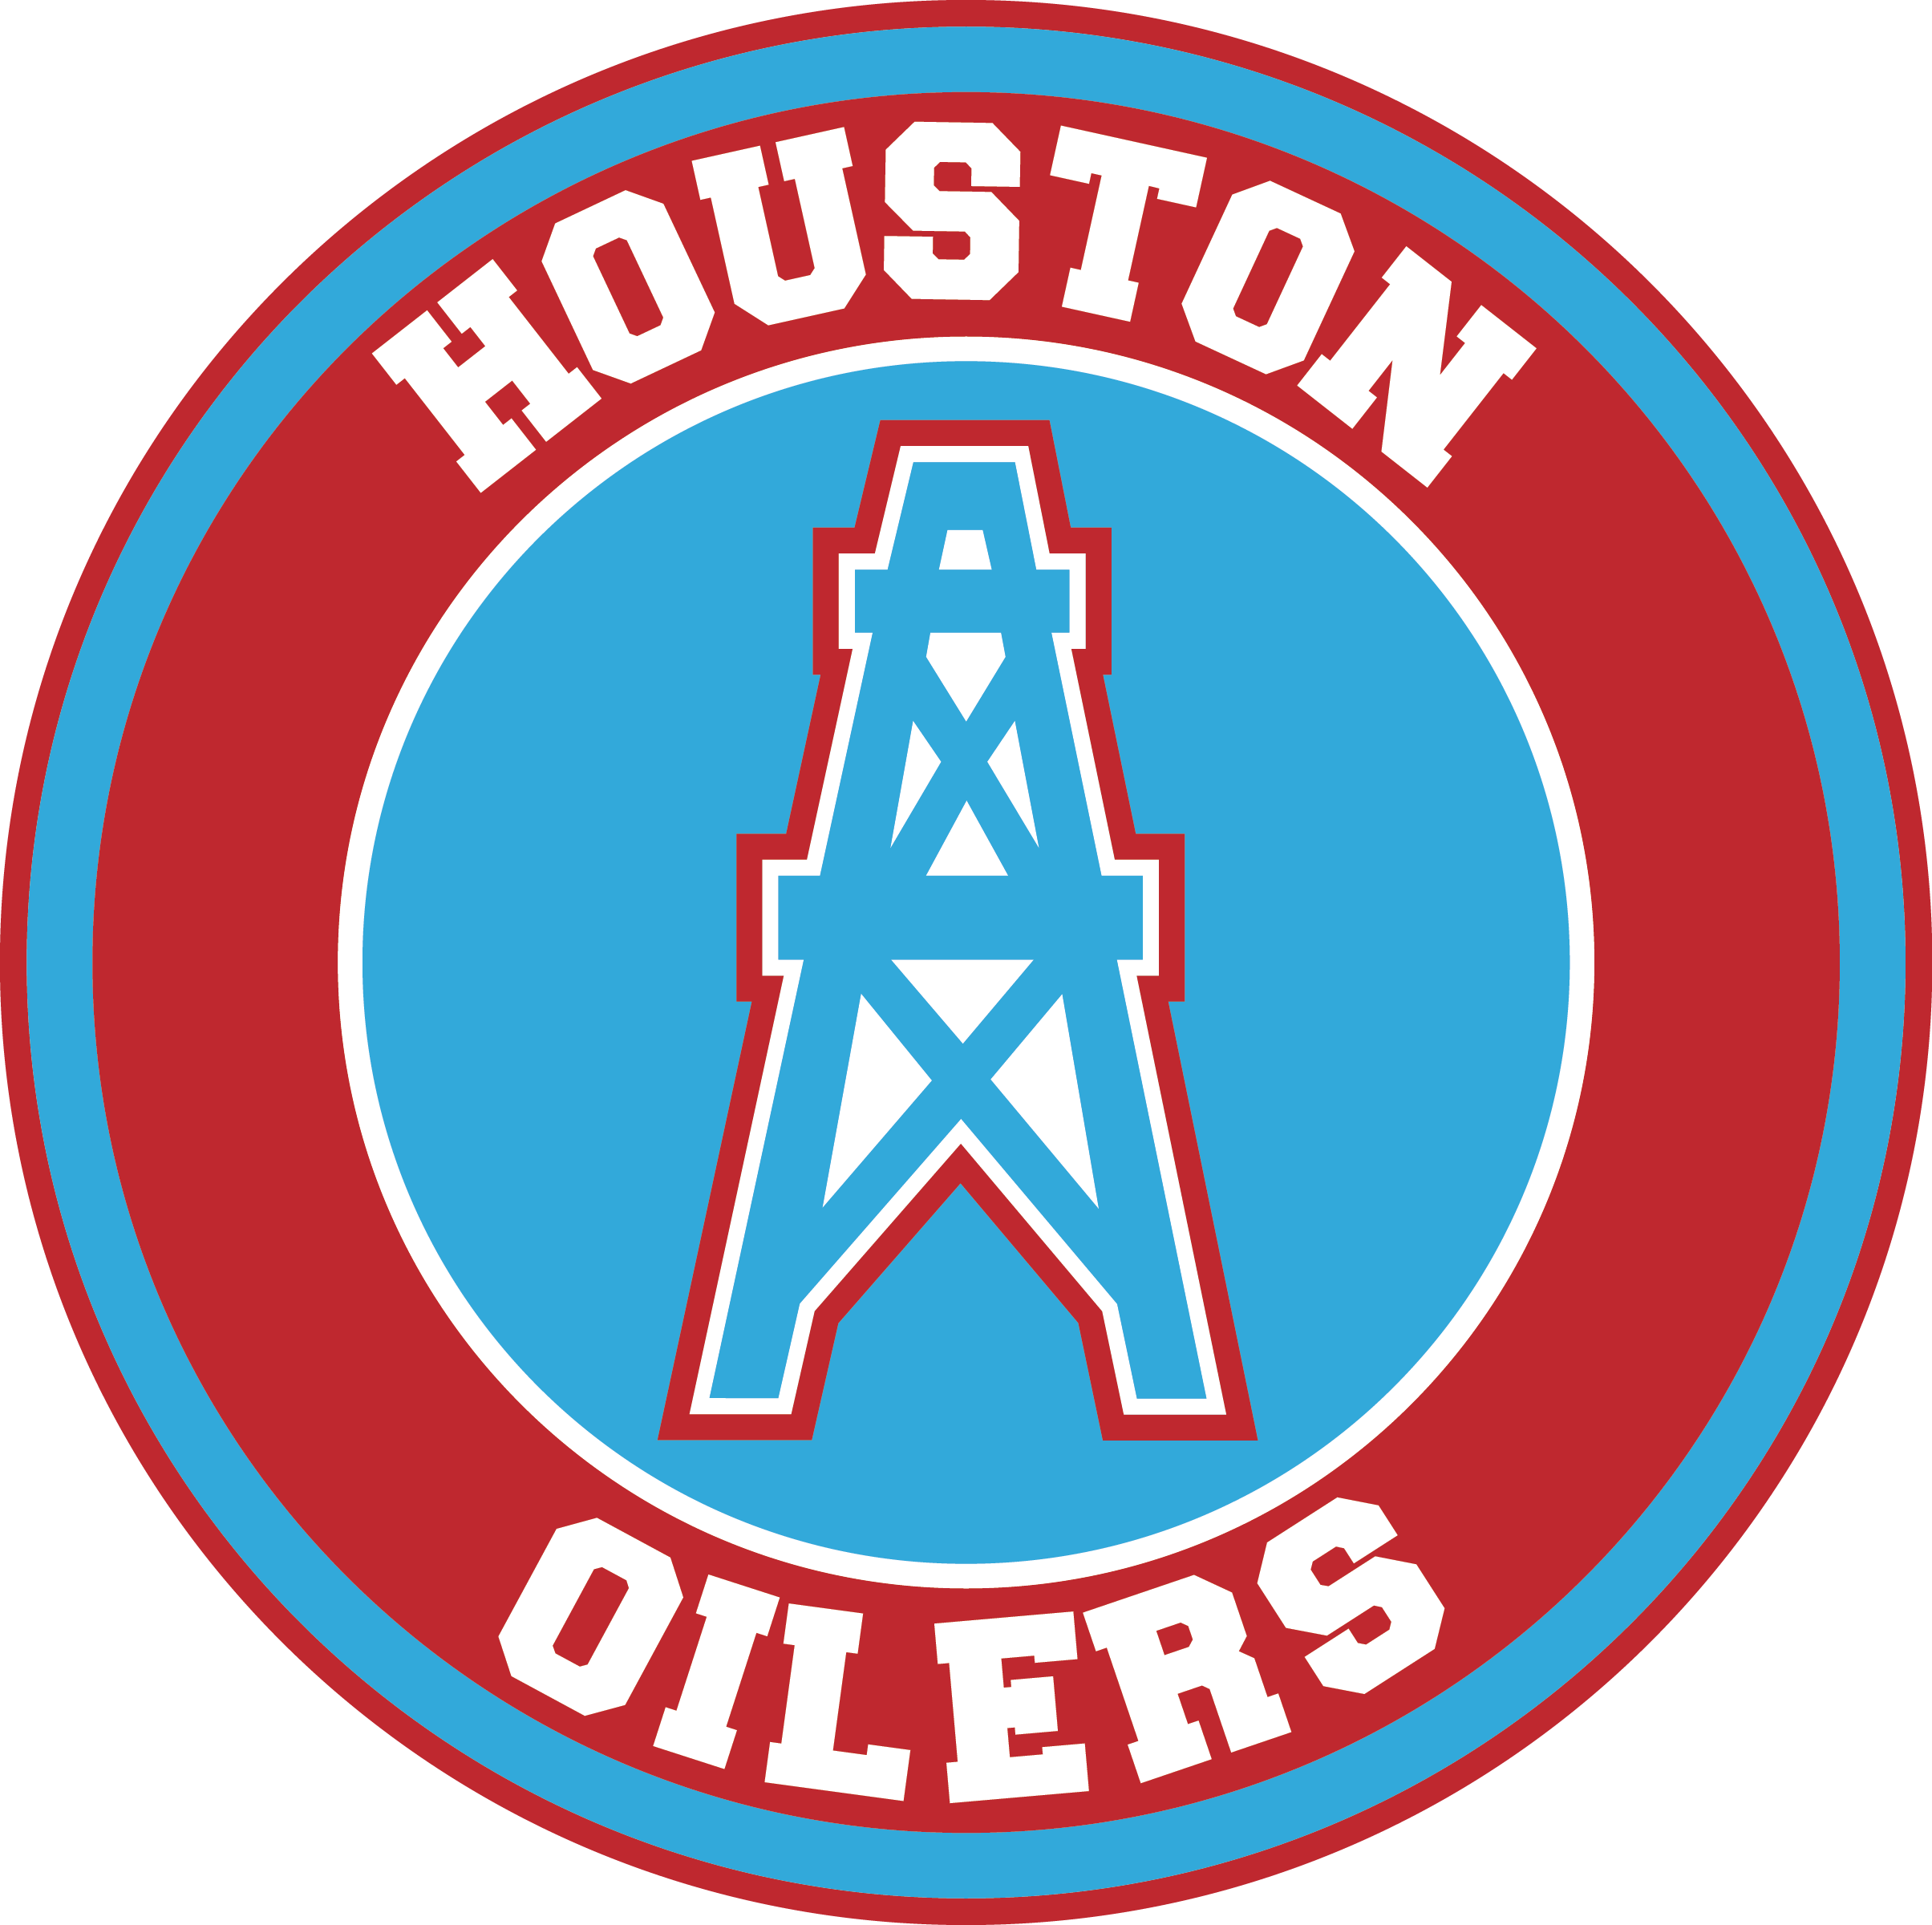 Houston Oilers Distressed Vintage logo shirt